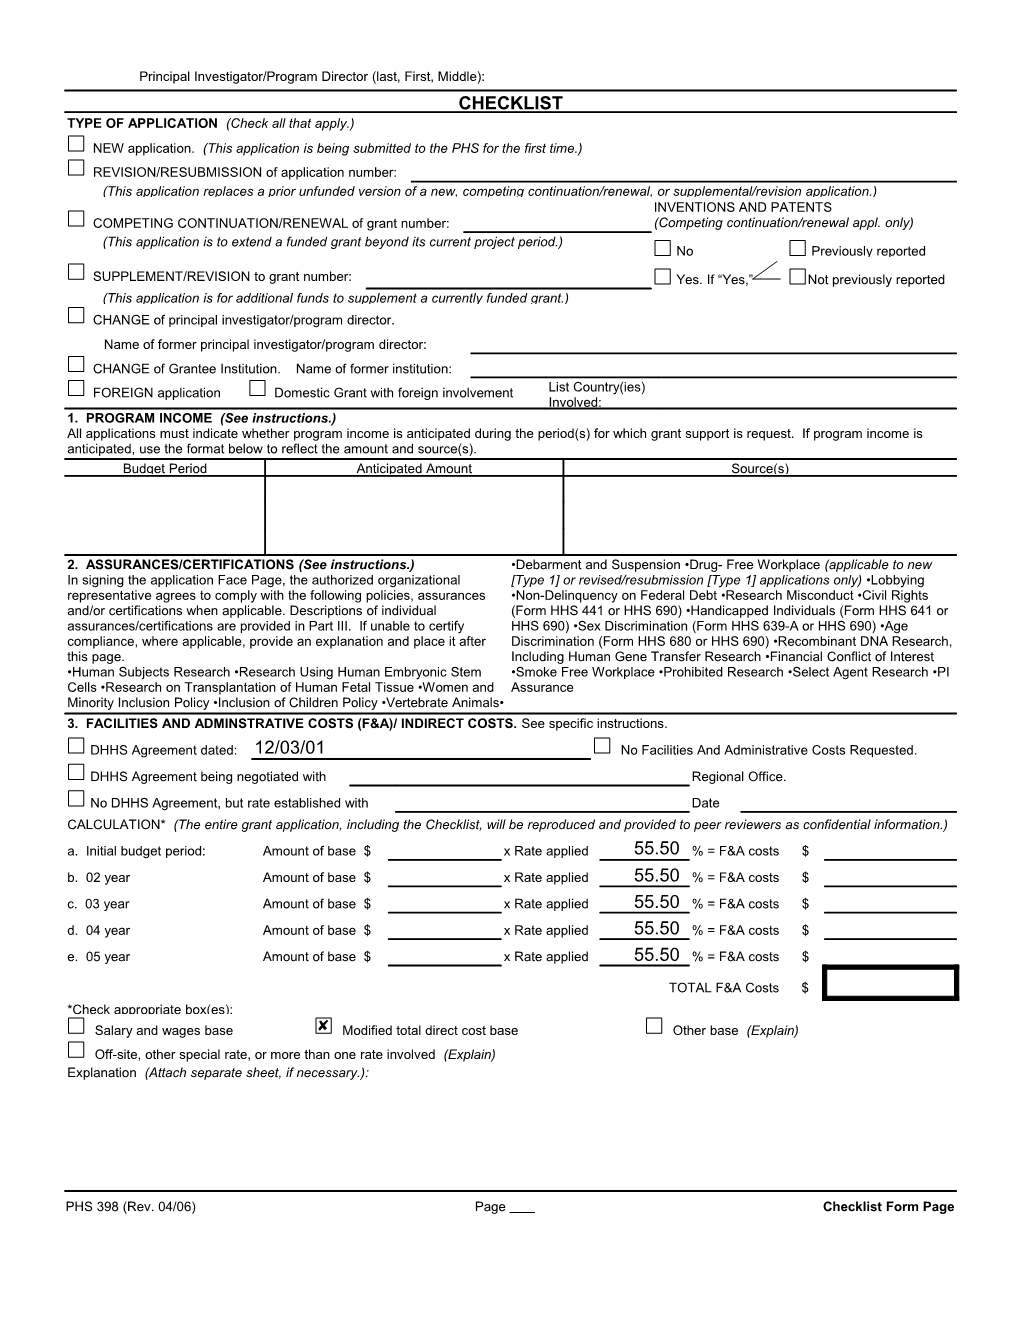 PHS 398 (Rev. 4/06), Checklist Form Page